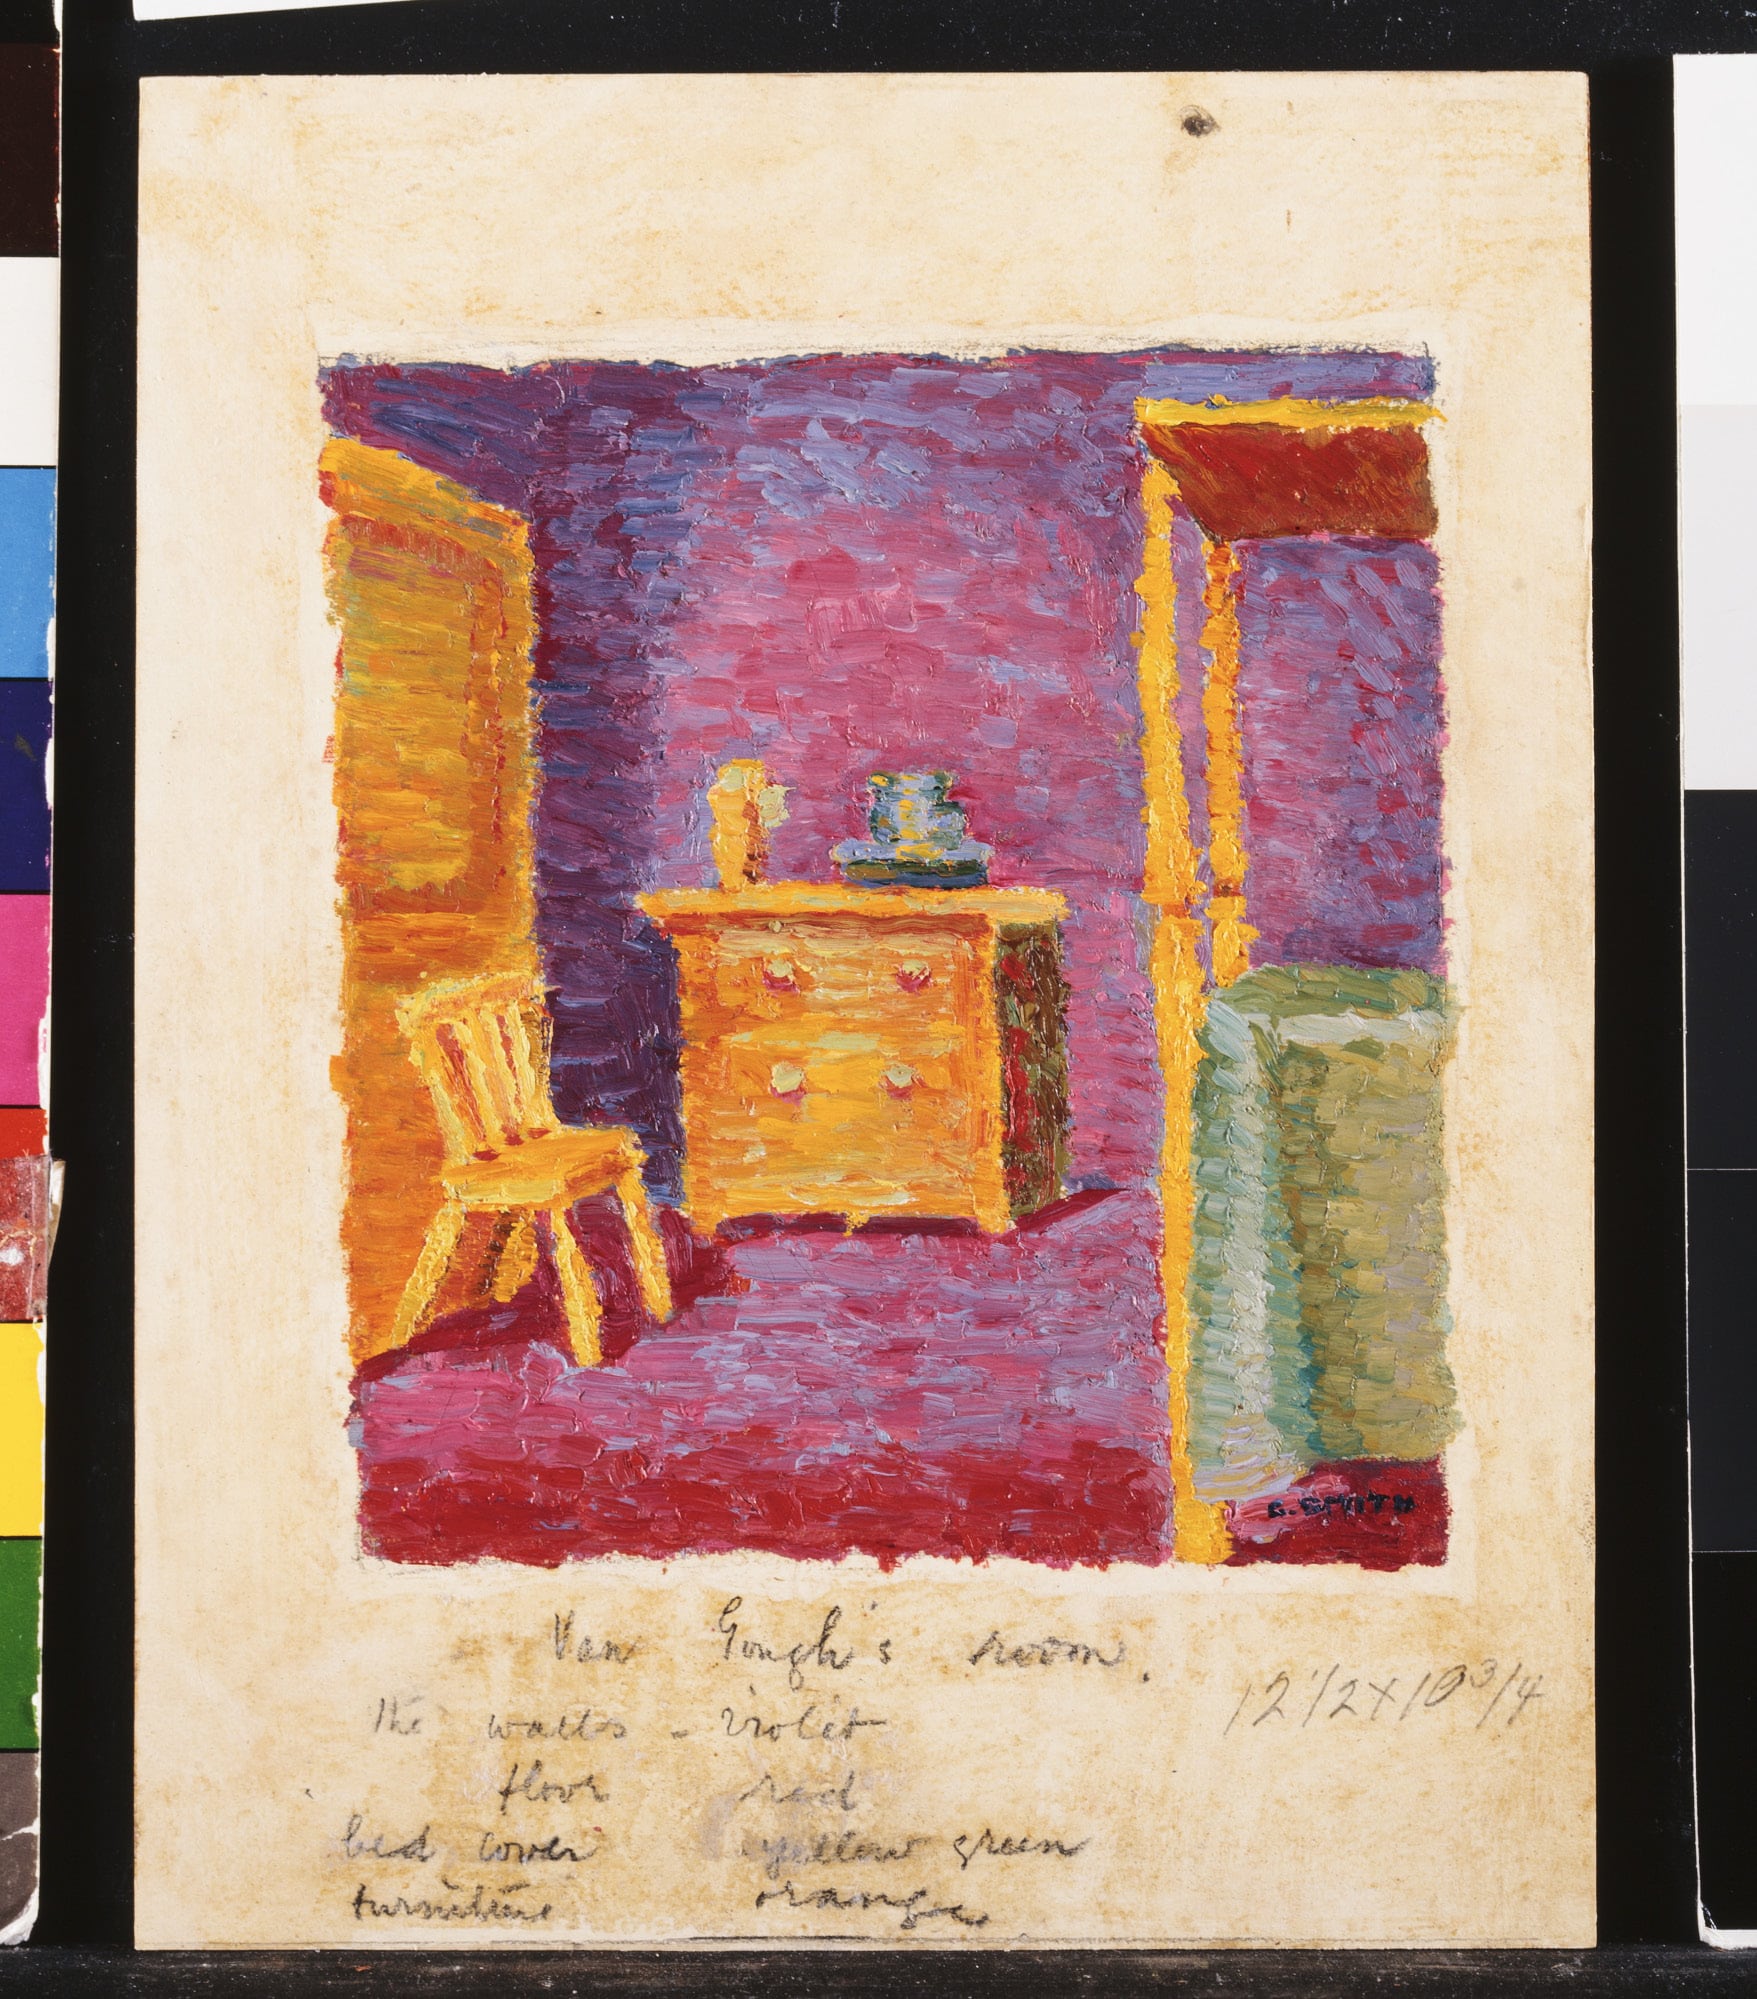 Grace Cossington Smith, <em>Van Gogh’s room</em>, c. 1916, oil on paper on composition board, image 19.4 × 17.5 cm, support 29.9 × 20.9 cm, National Gallery of Australia, Canberra, purchased 1976 © Estate of Grace Cossington Smith